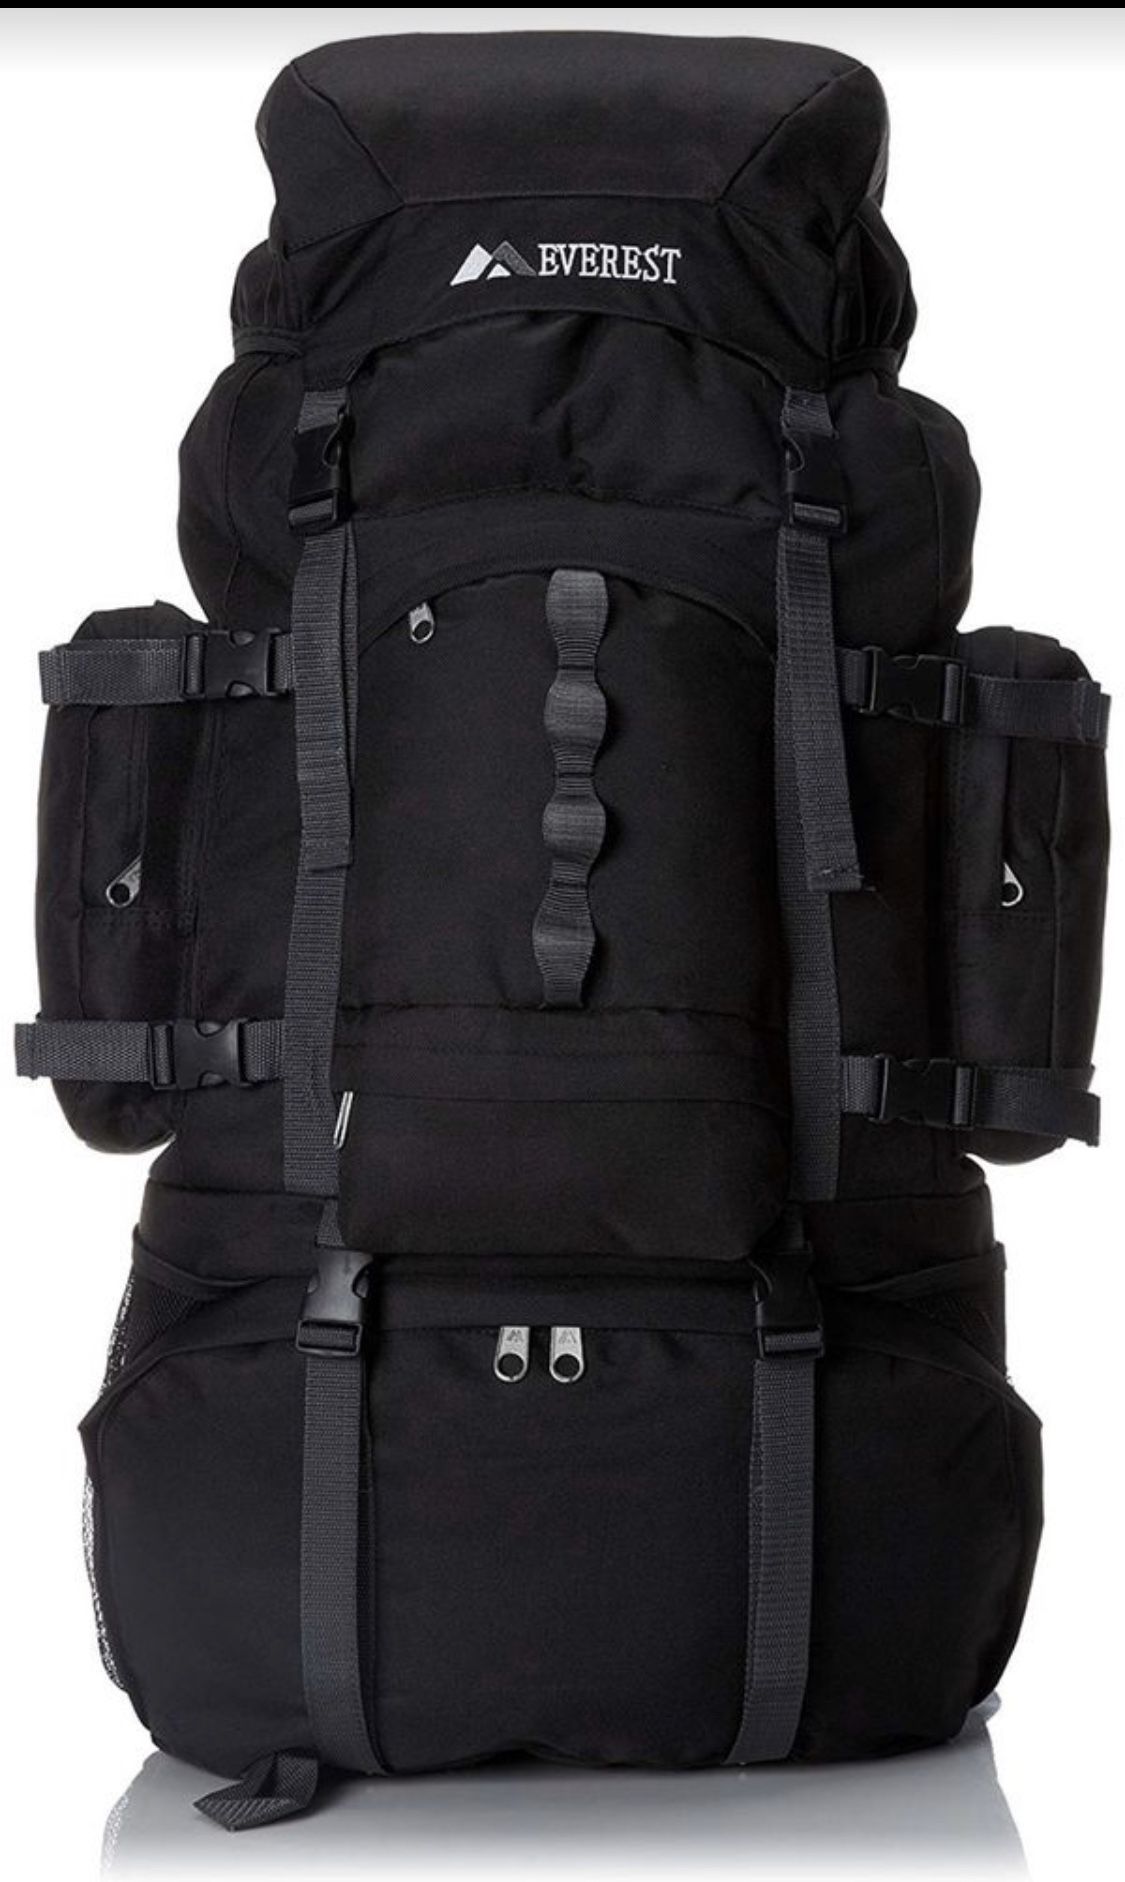 Deluxe Everest Hiking Backpack - Brand New!